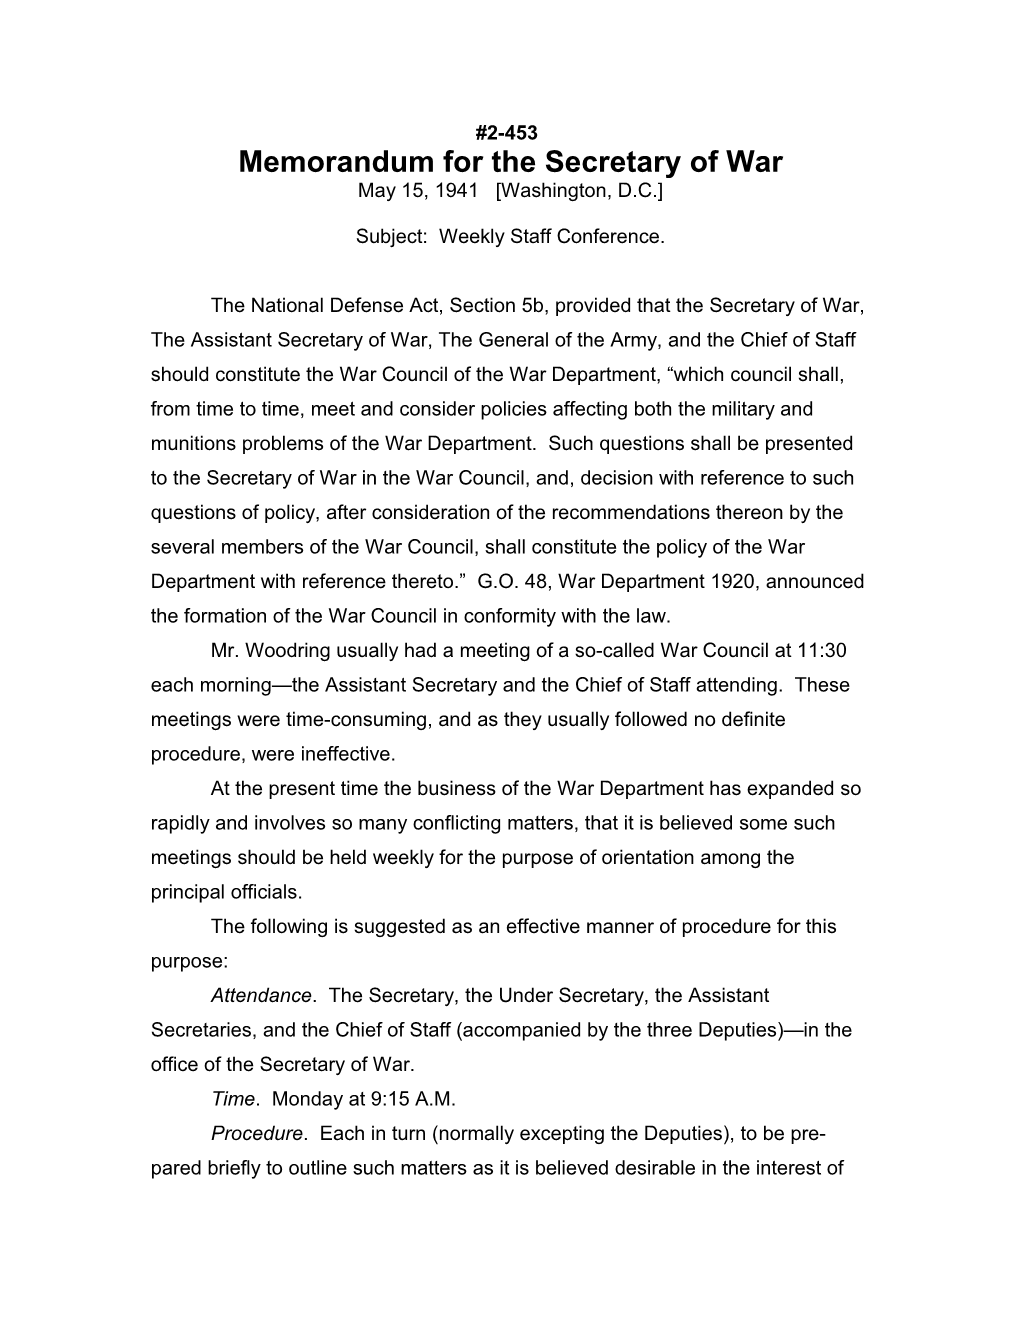 Memorandum for the Secretary of War s2